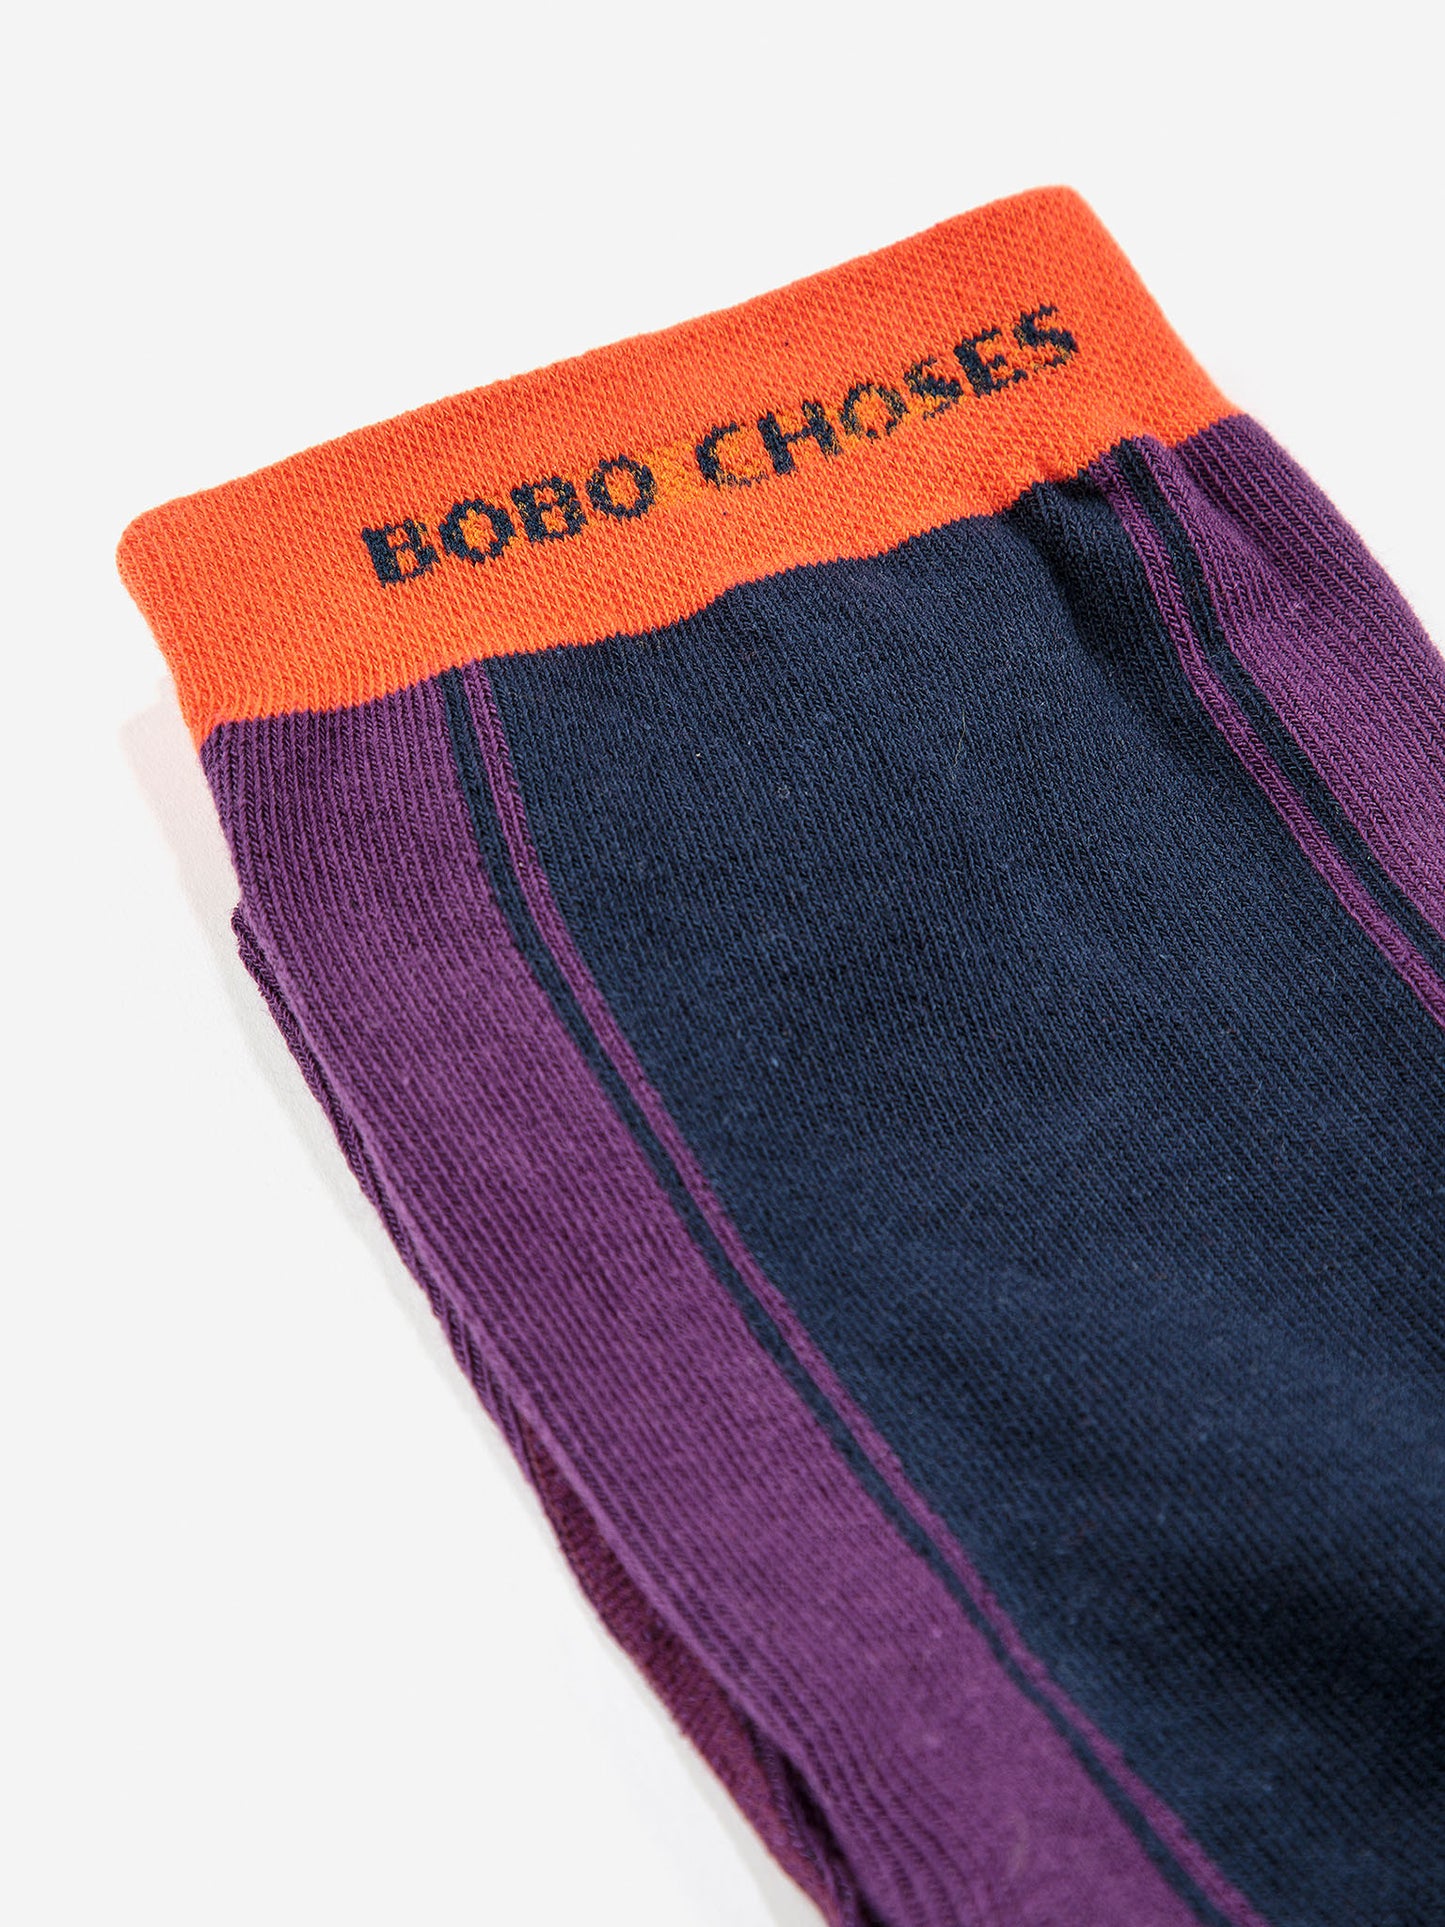 Bobo Colors tights